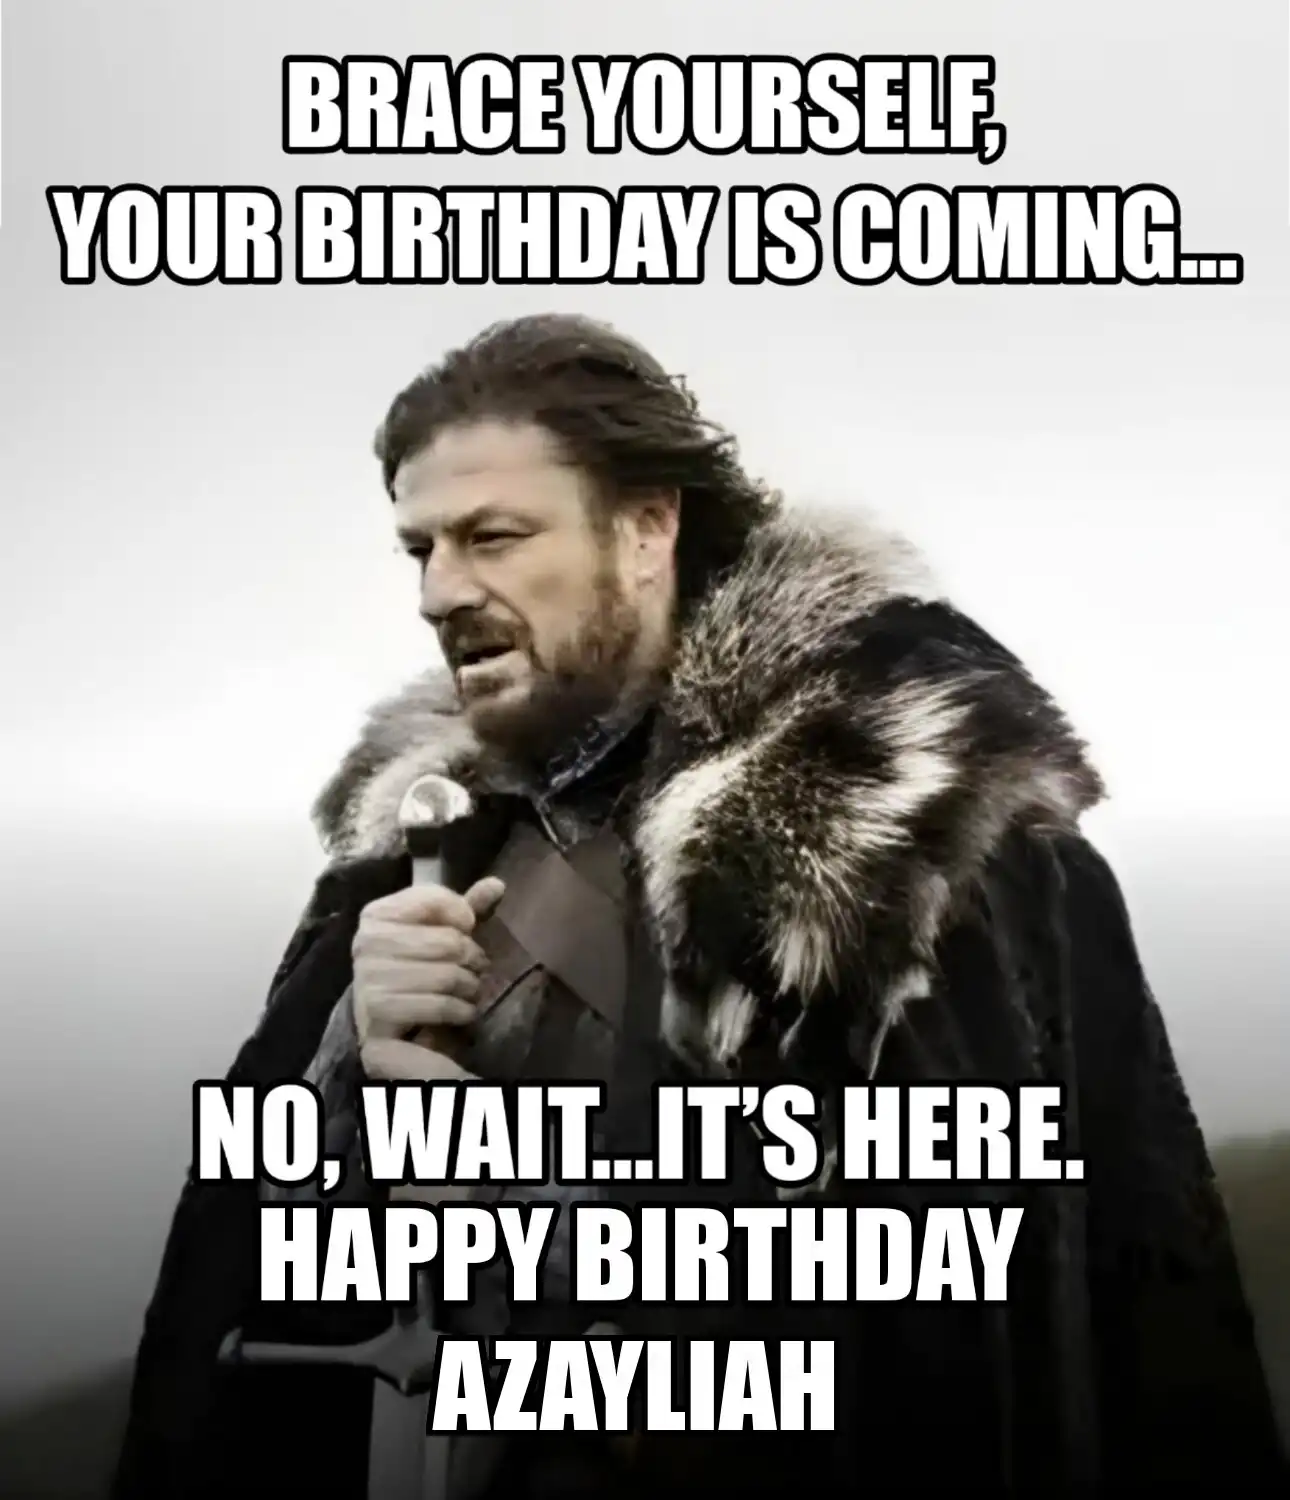 Happy Birthday Azayliah Brace Yourself Your Birthday Is Coming Meme